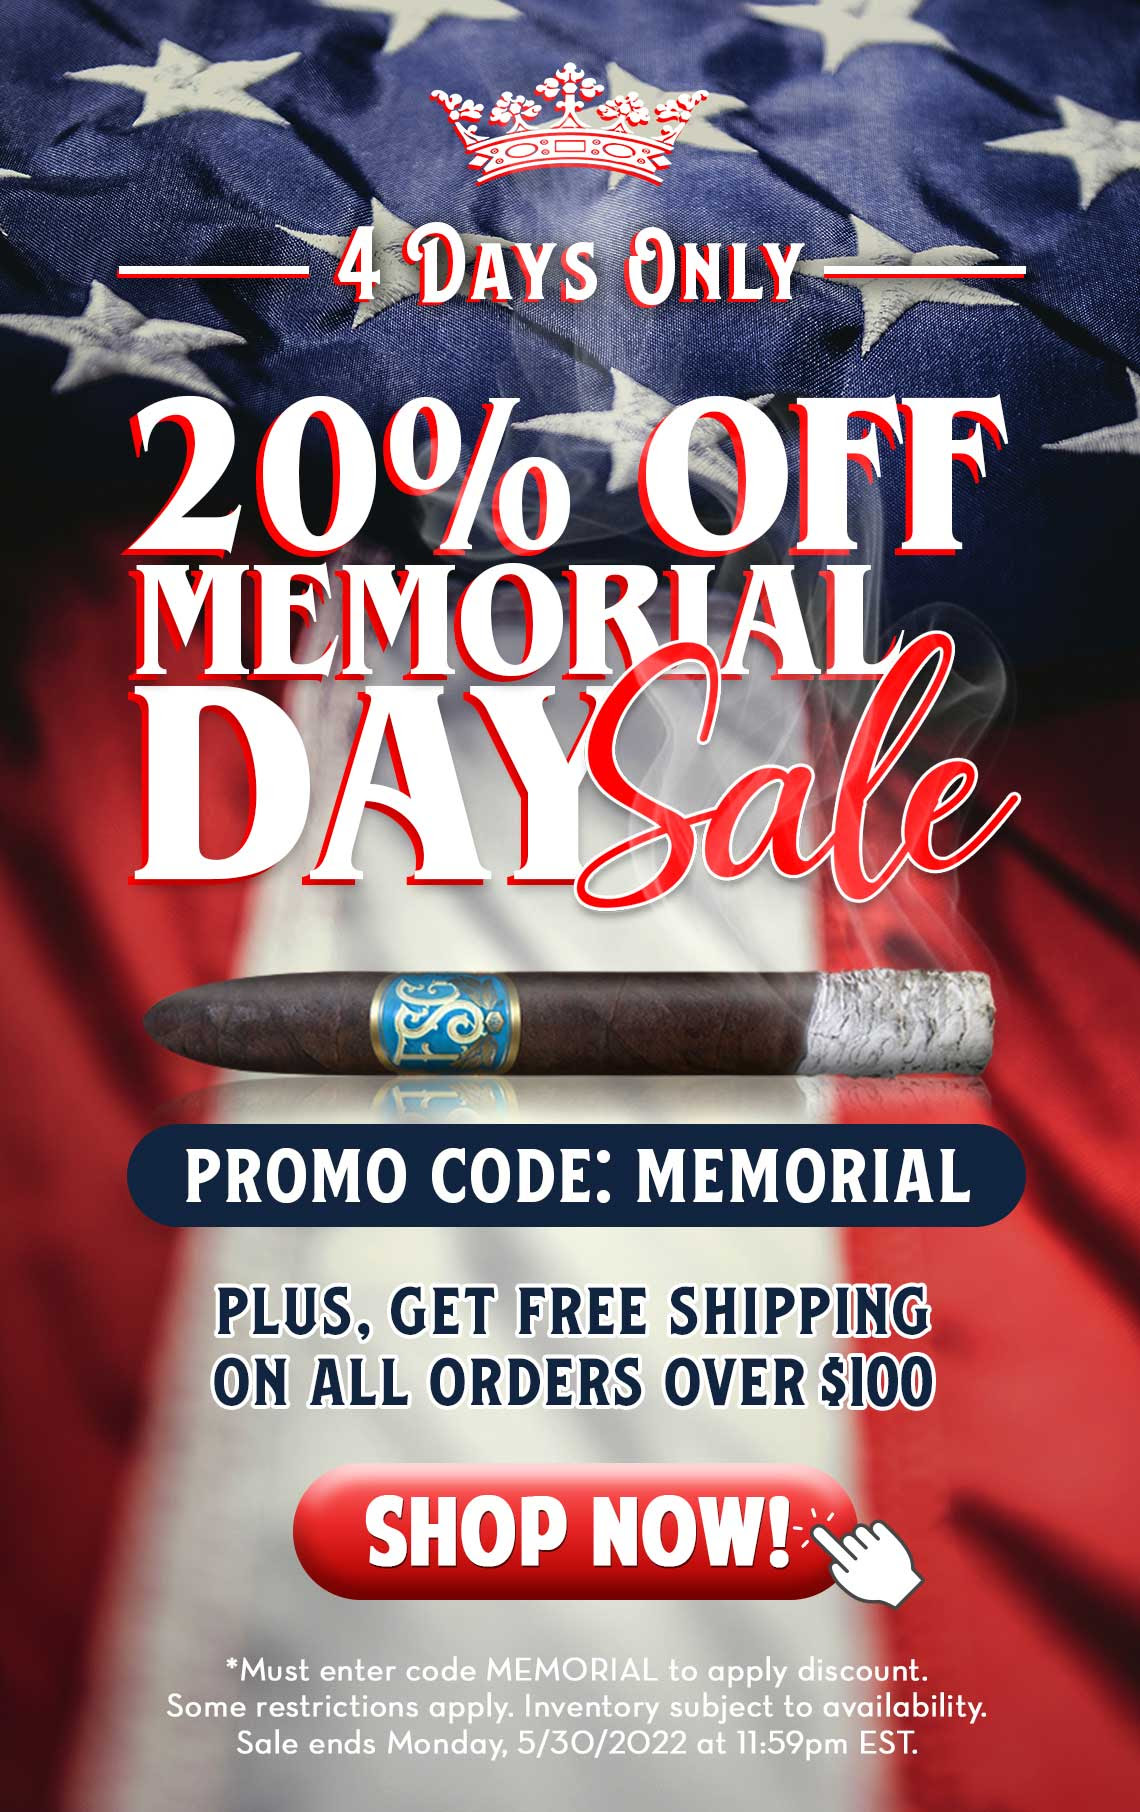 Memorial Day Sale - 20% OFF!